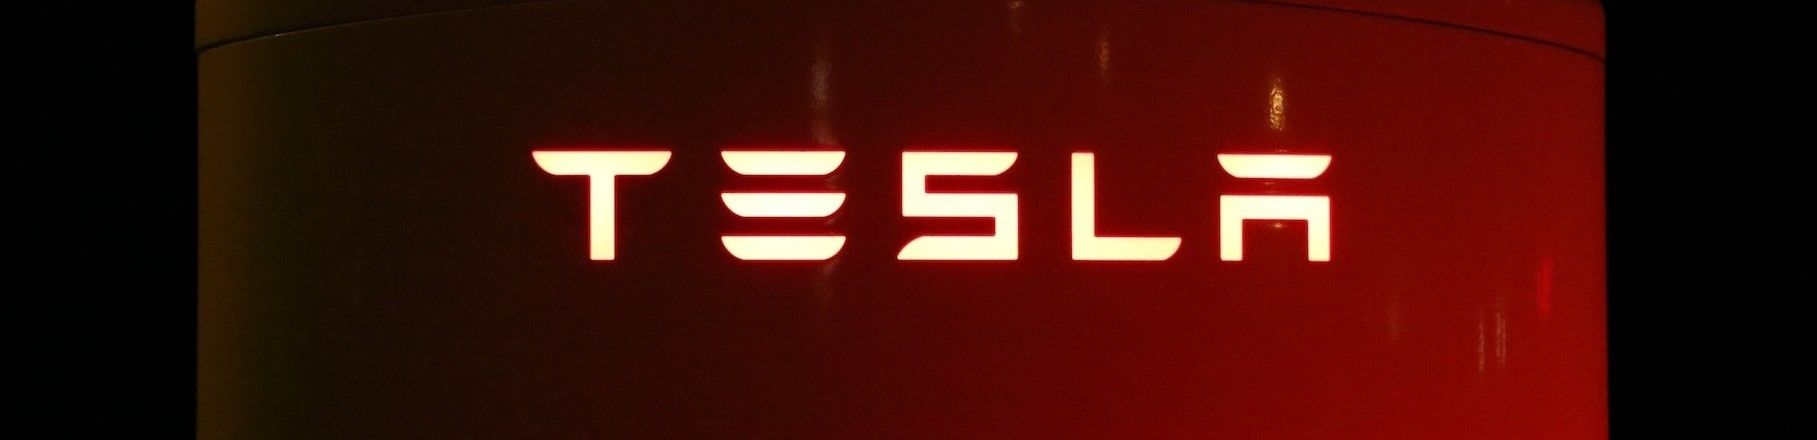 Tesla logo on a red column